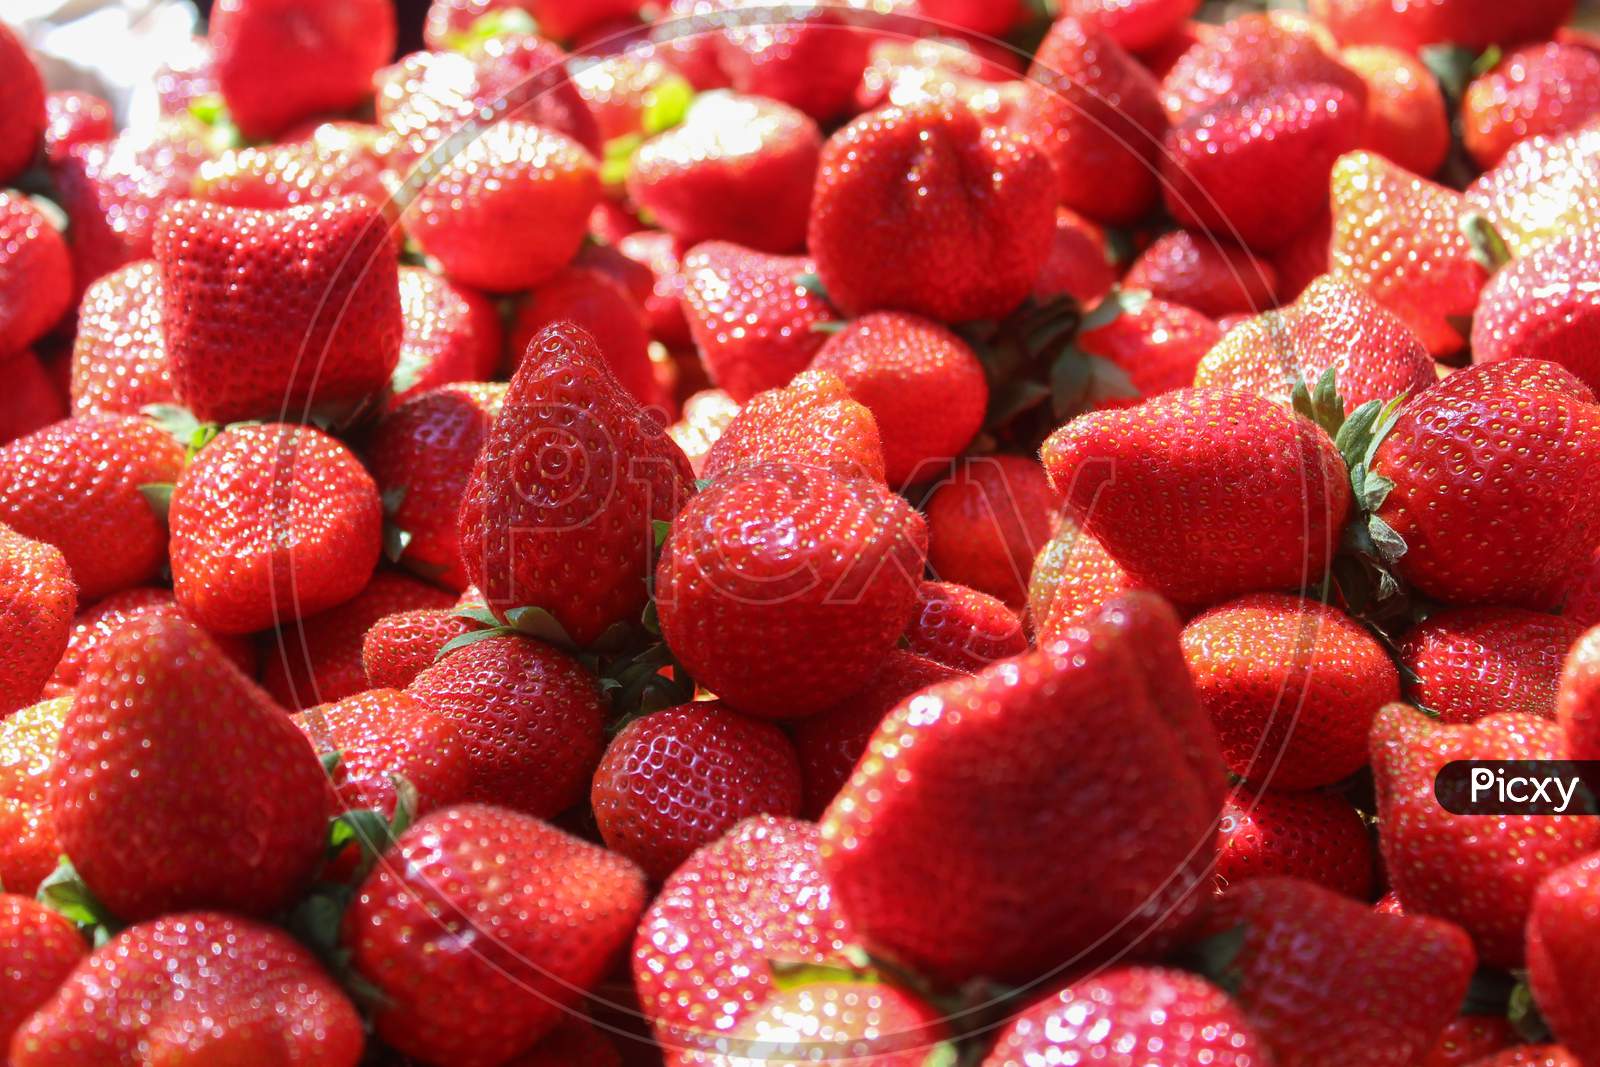 Organic fresh looking strawberries